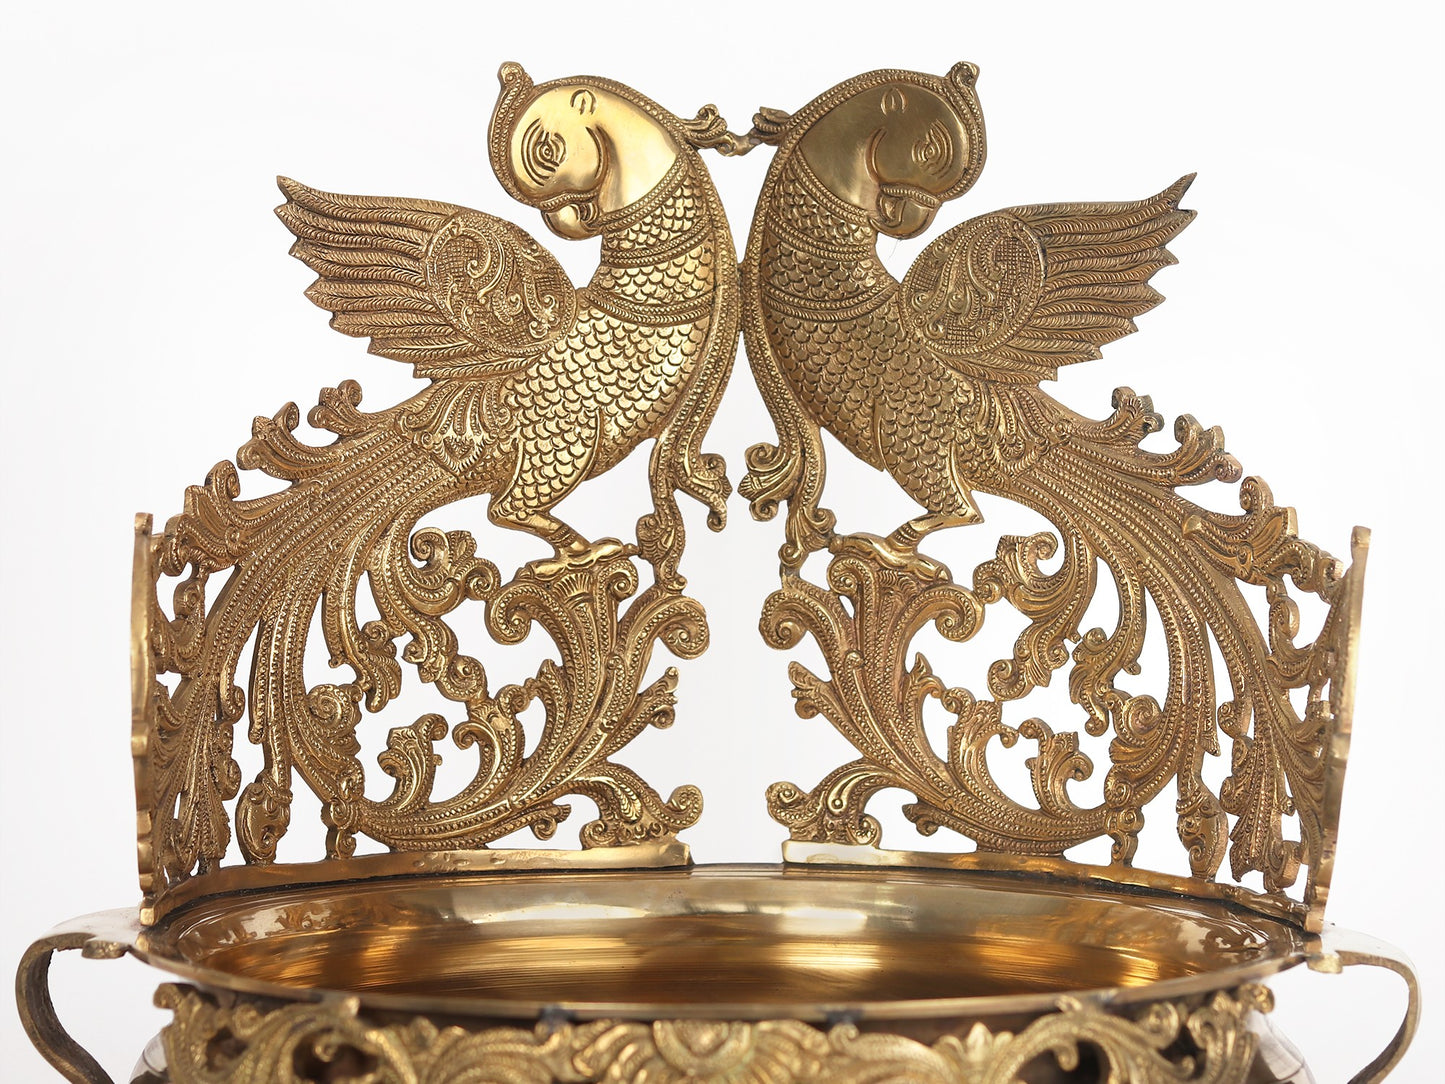 20" Brass Parrot Urli with Stand | Home Decor Showpiece